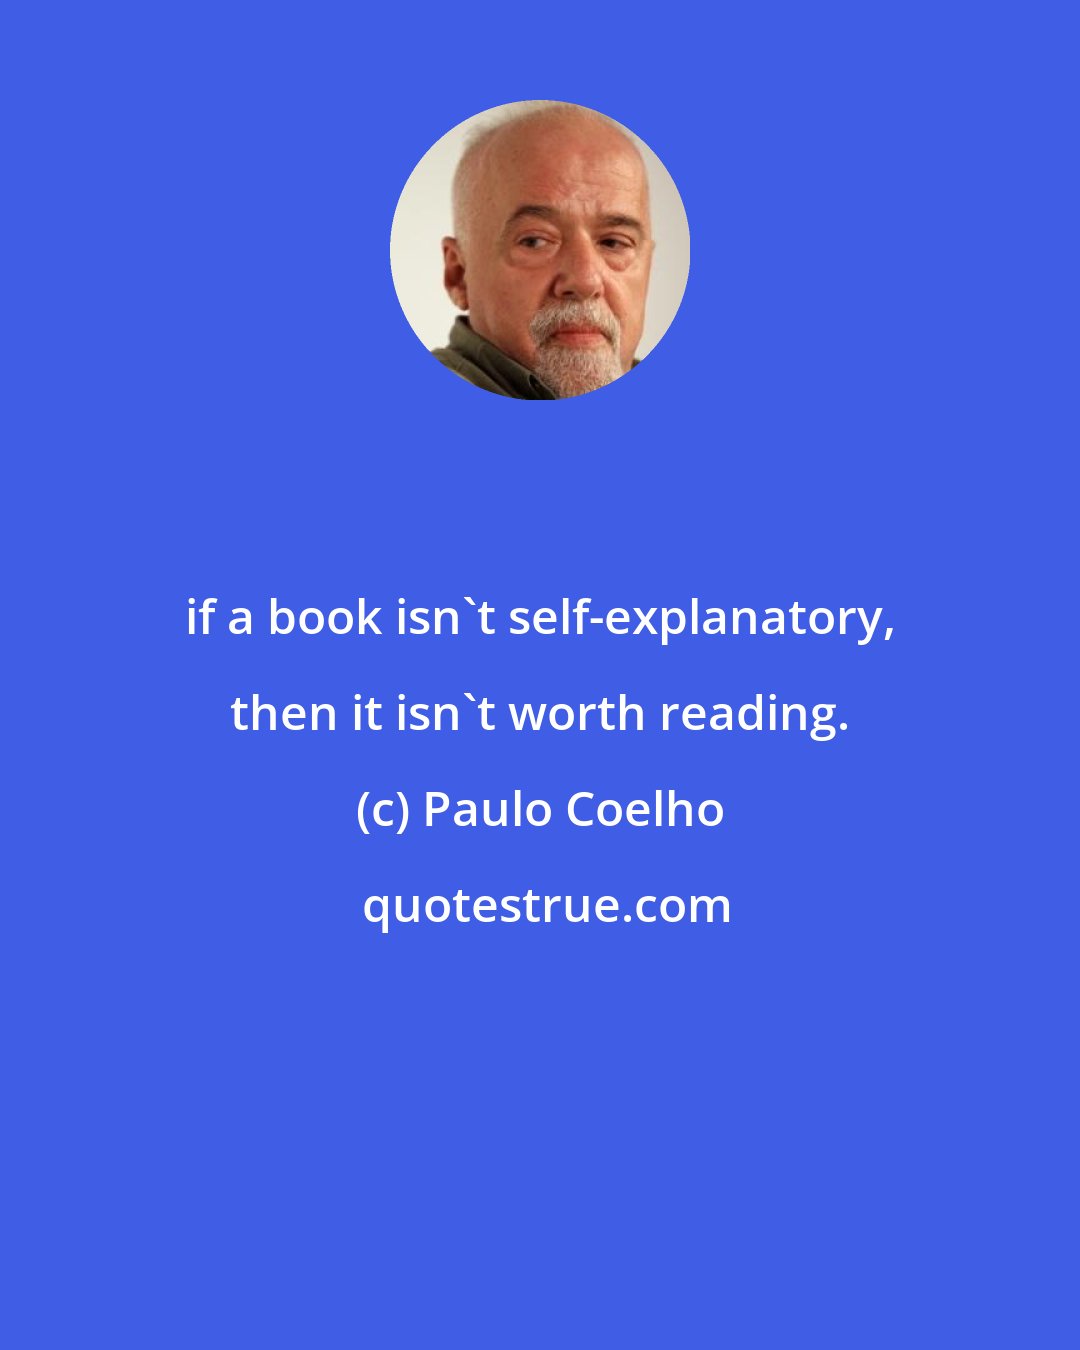 Paulo Coelho: if a book isn't self-explanatory, then it isn't worth reading.